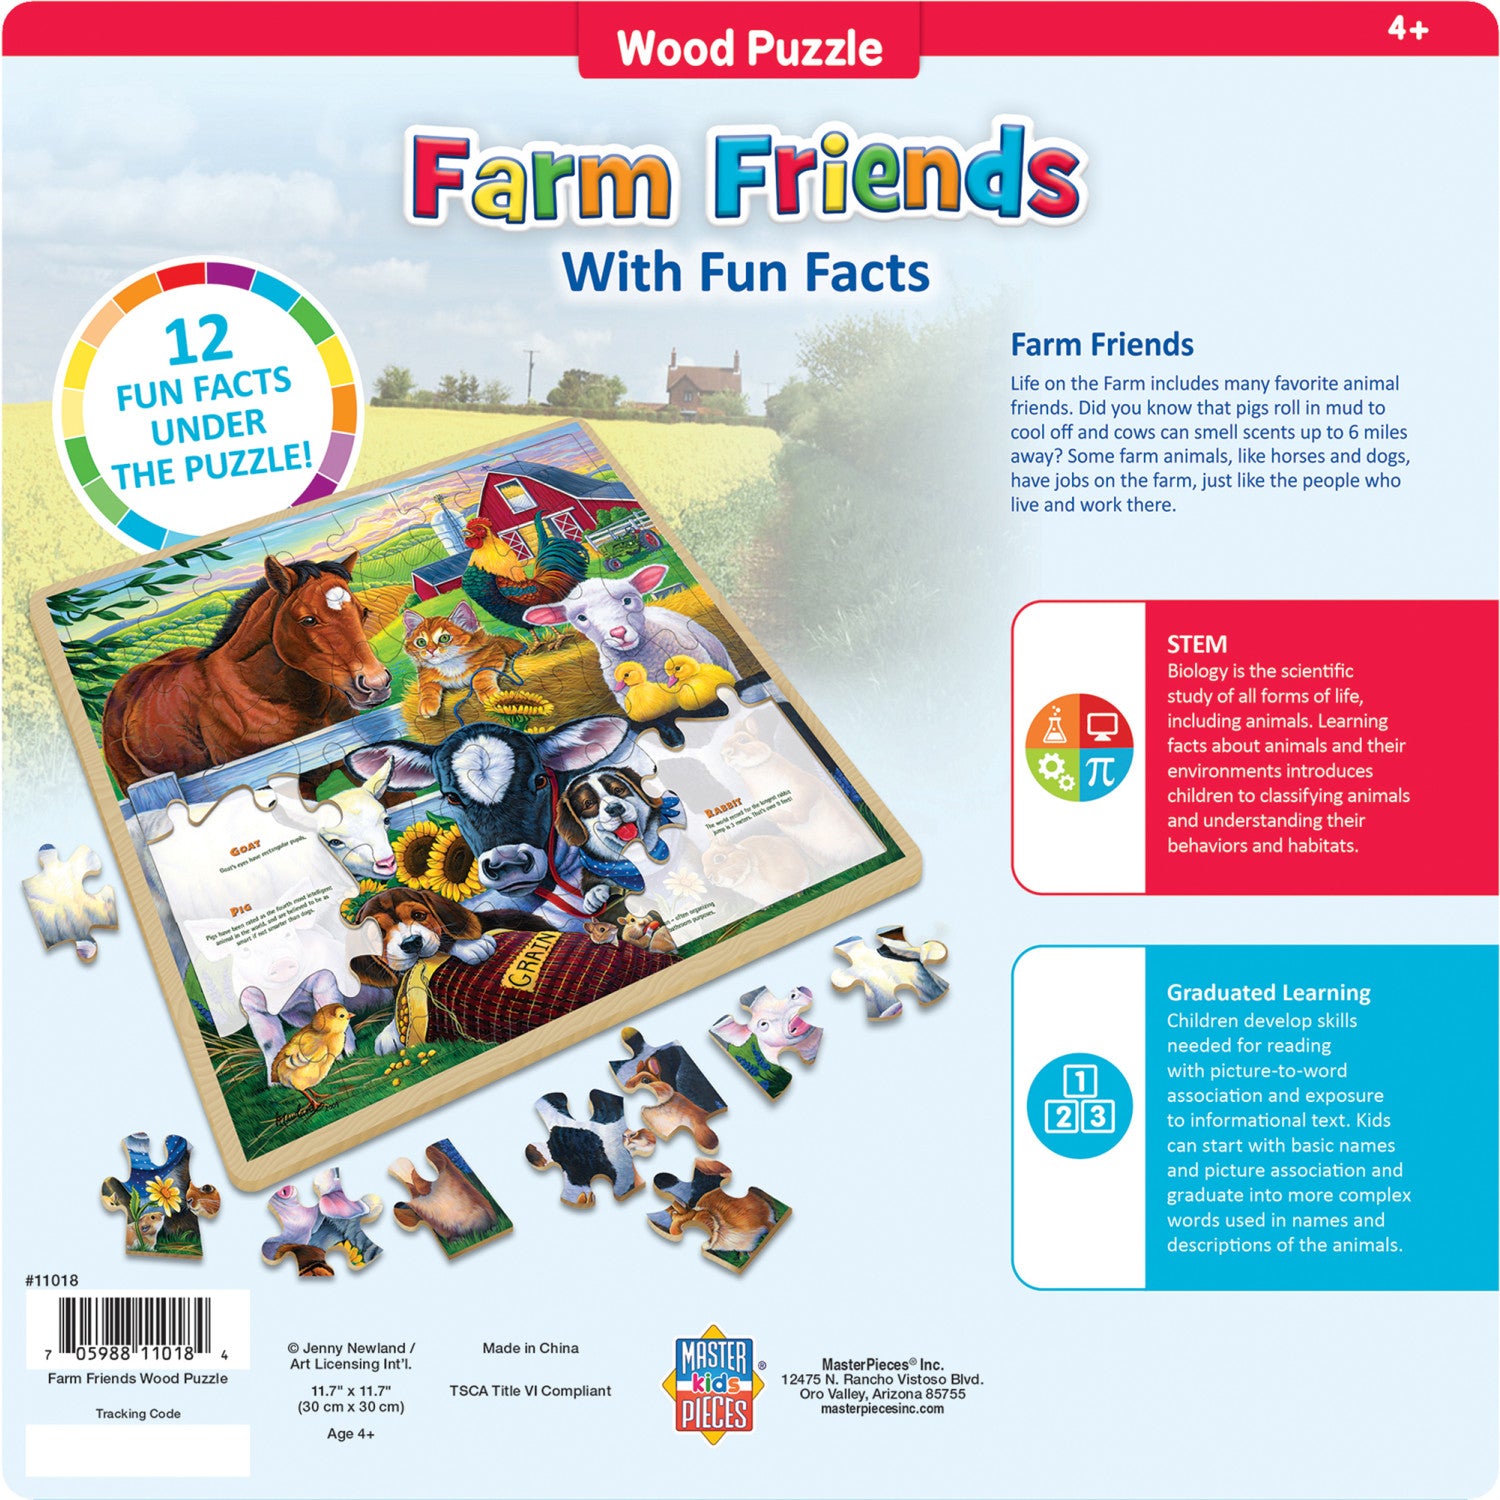 Wood Fun Facts - Farm Friends 48 Piece Wood Jigsaw Puzzle